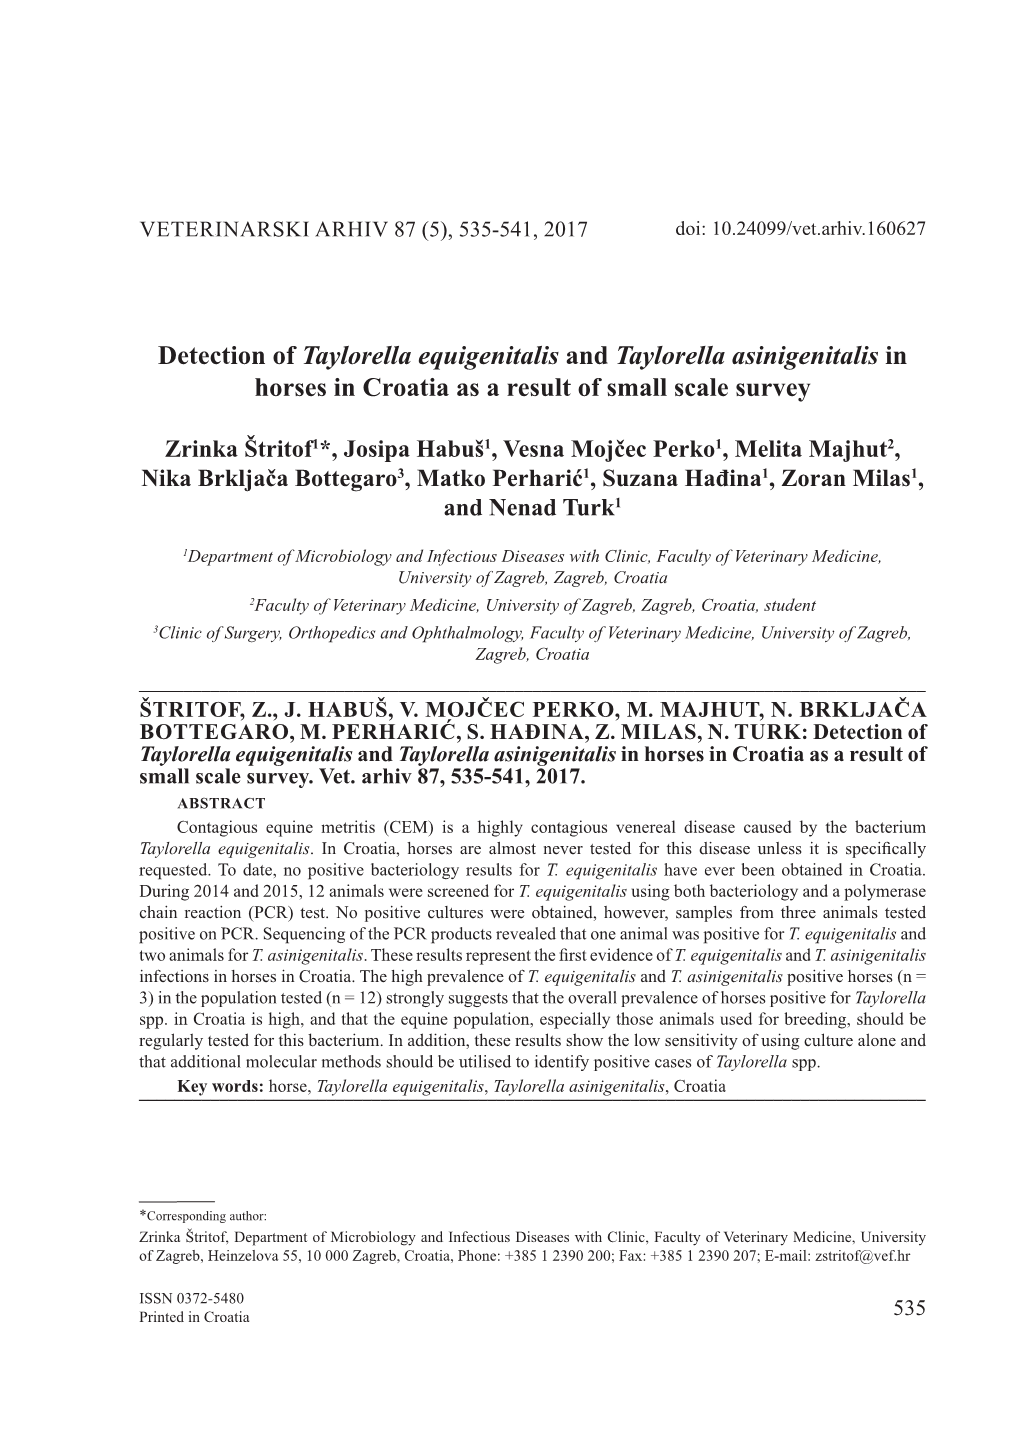 Detection of Taylorella Equigenitalis and Taylorella Asinigenitalis in Horses in Croatia As a Result of Small Scale Survey